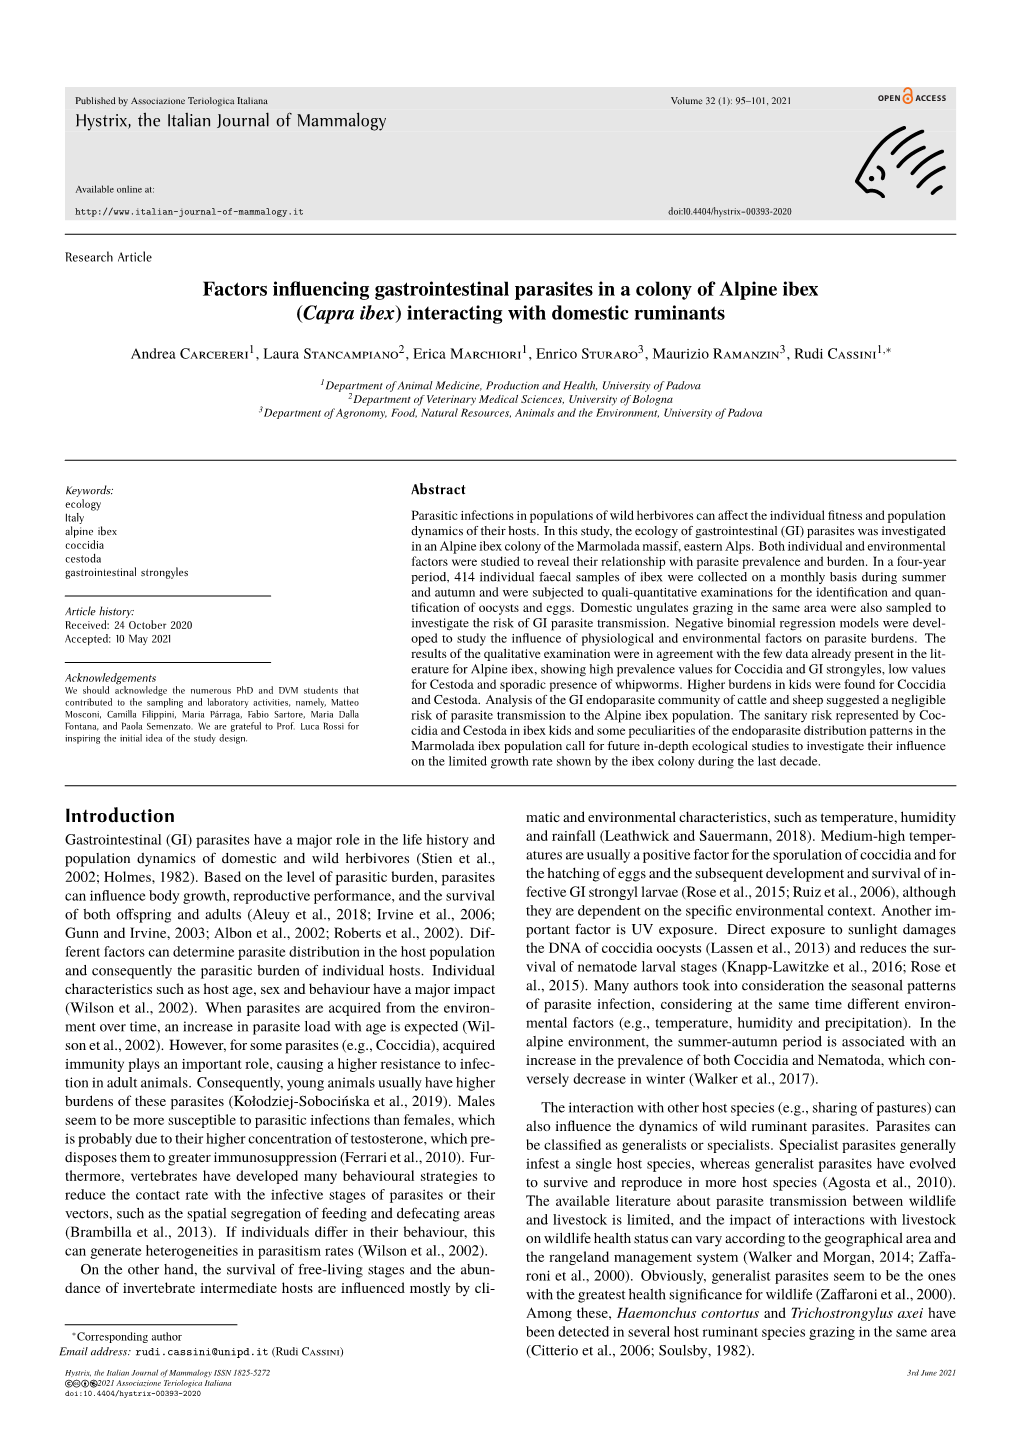 Factors Influencing Gastrointestinal Parasites in a Colony of Alpine Ibex (Capra Ibex)